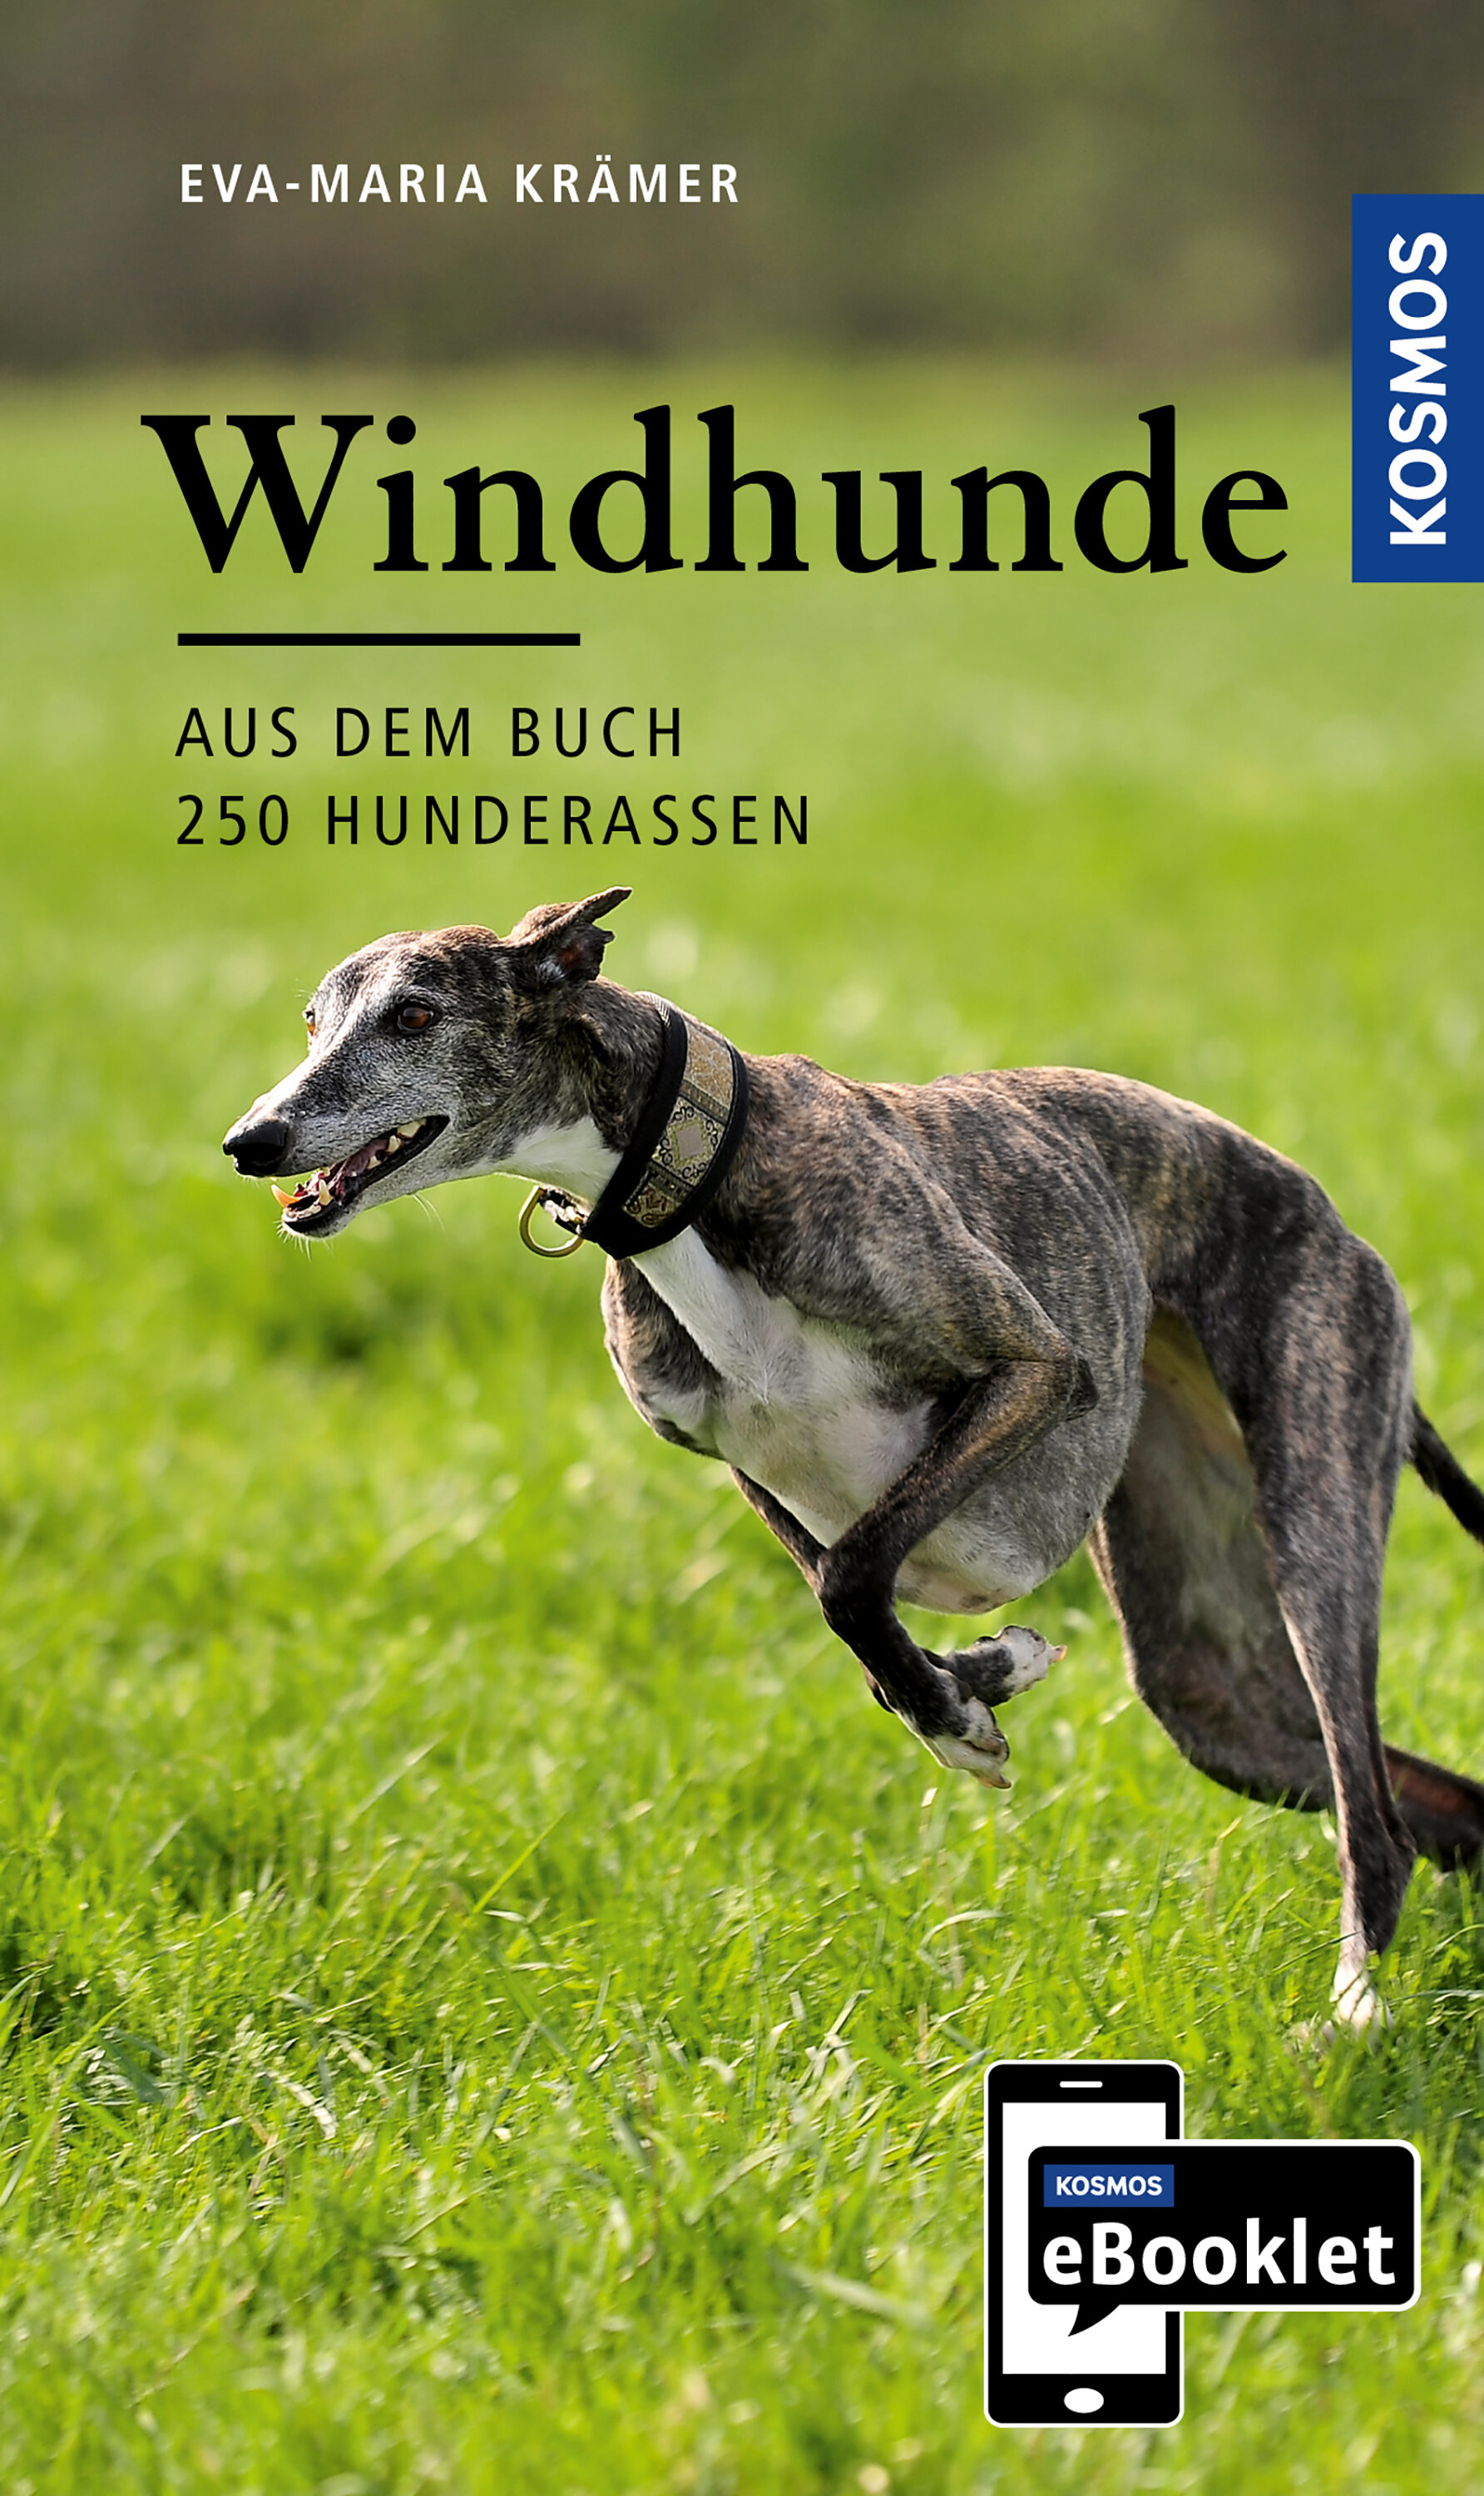 KOSMOS eBooklet: Windhunde - Ursprung  Wesen  Haltung